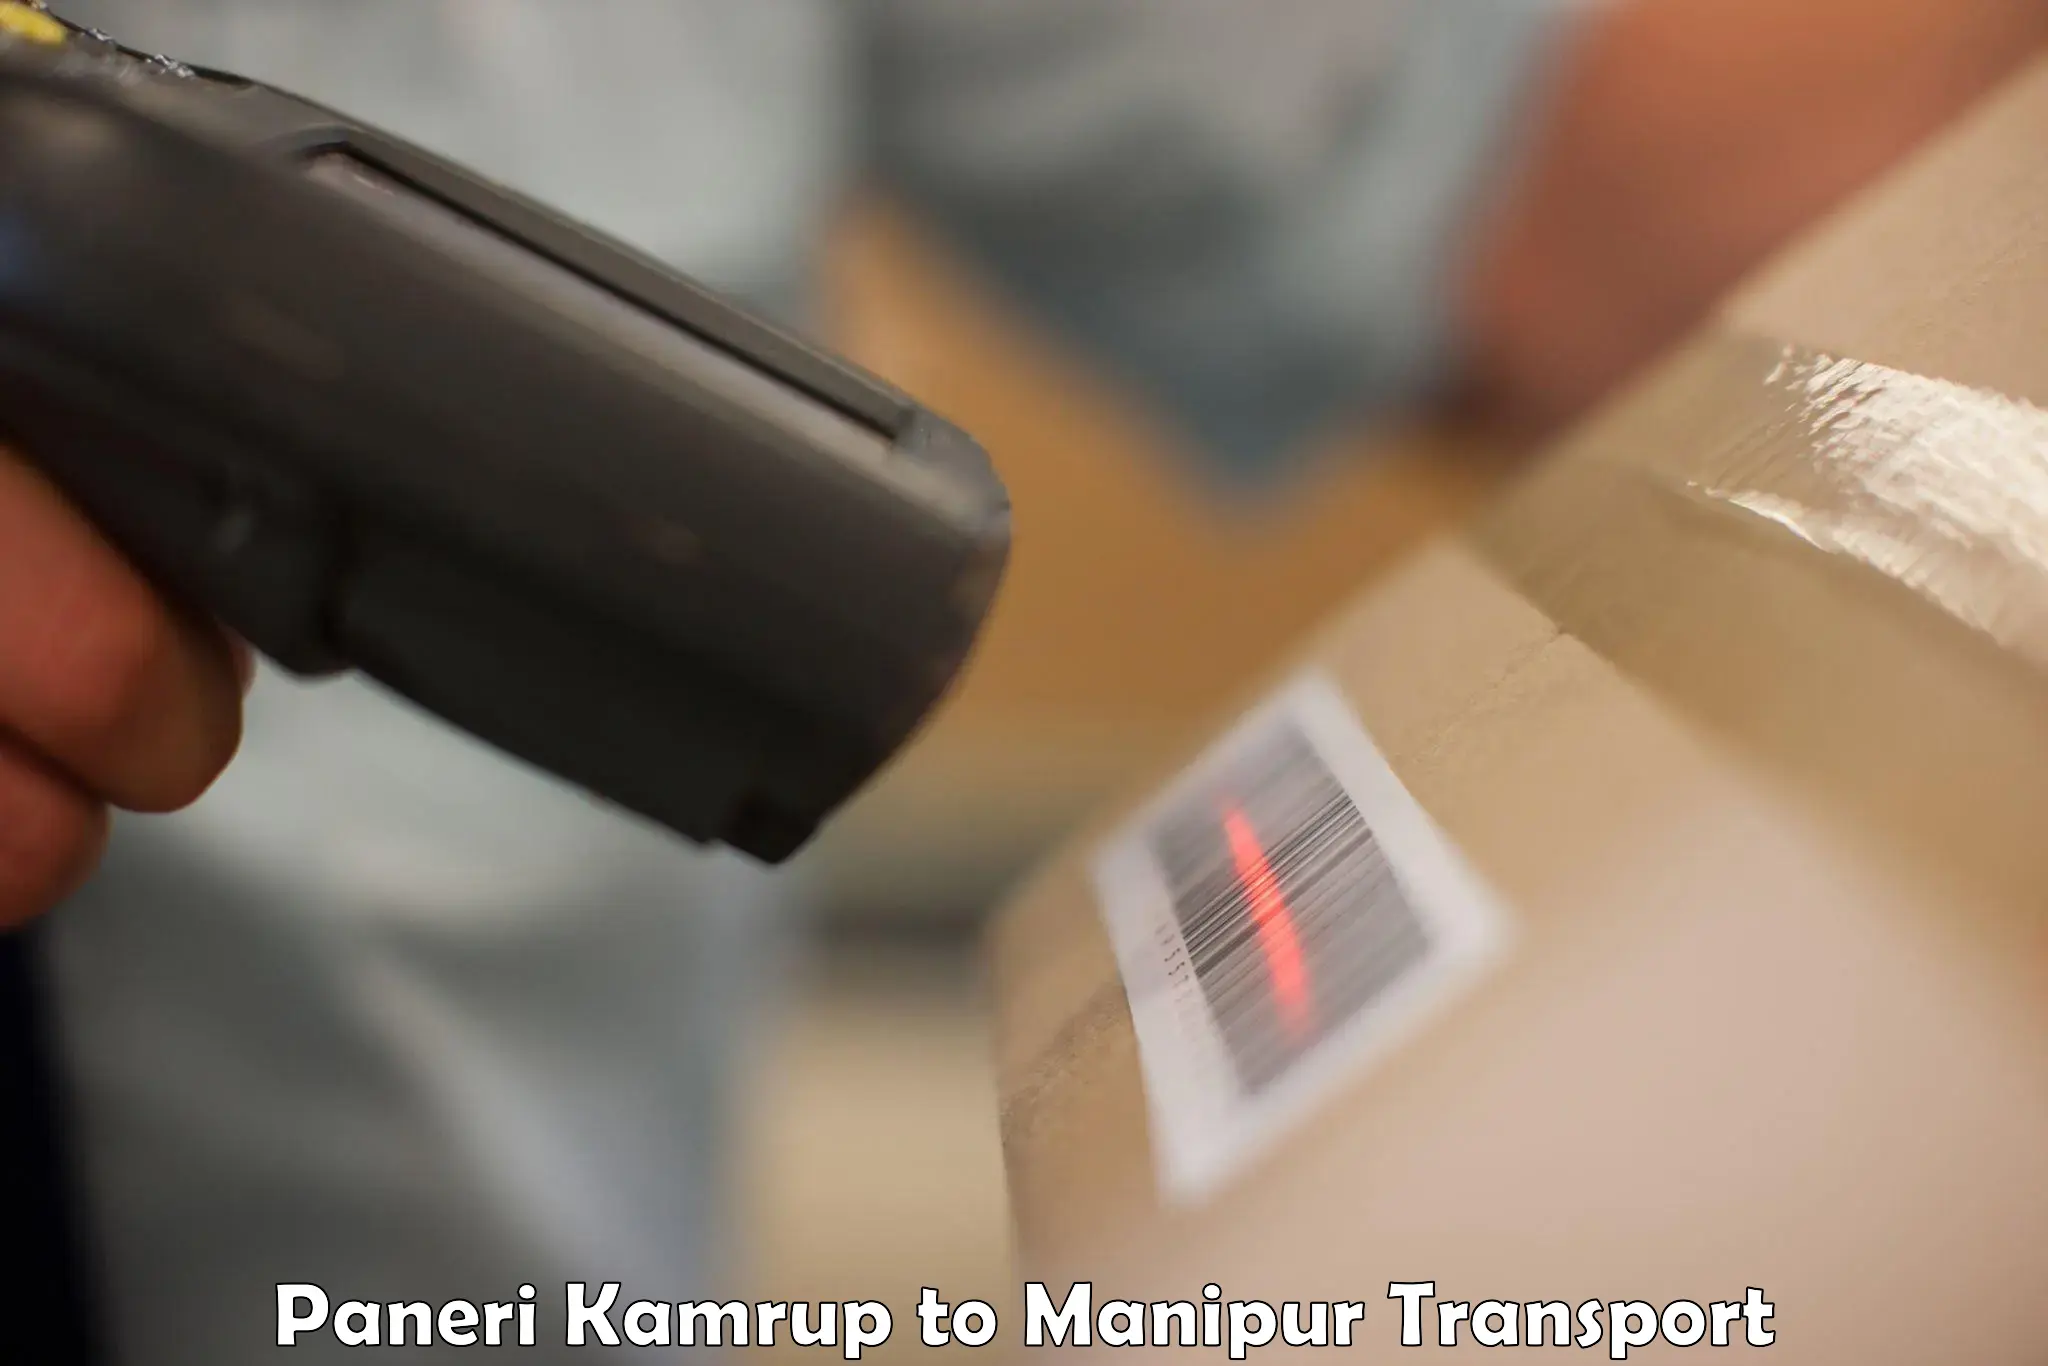 Truck transport companies in India Paneri Kamrup to Manipur